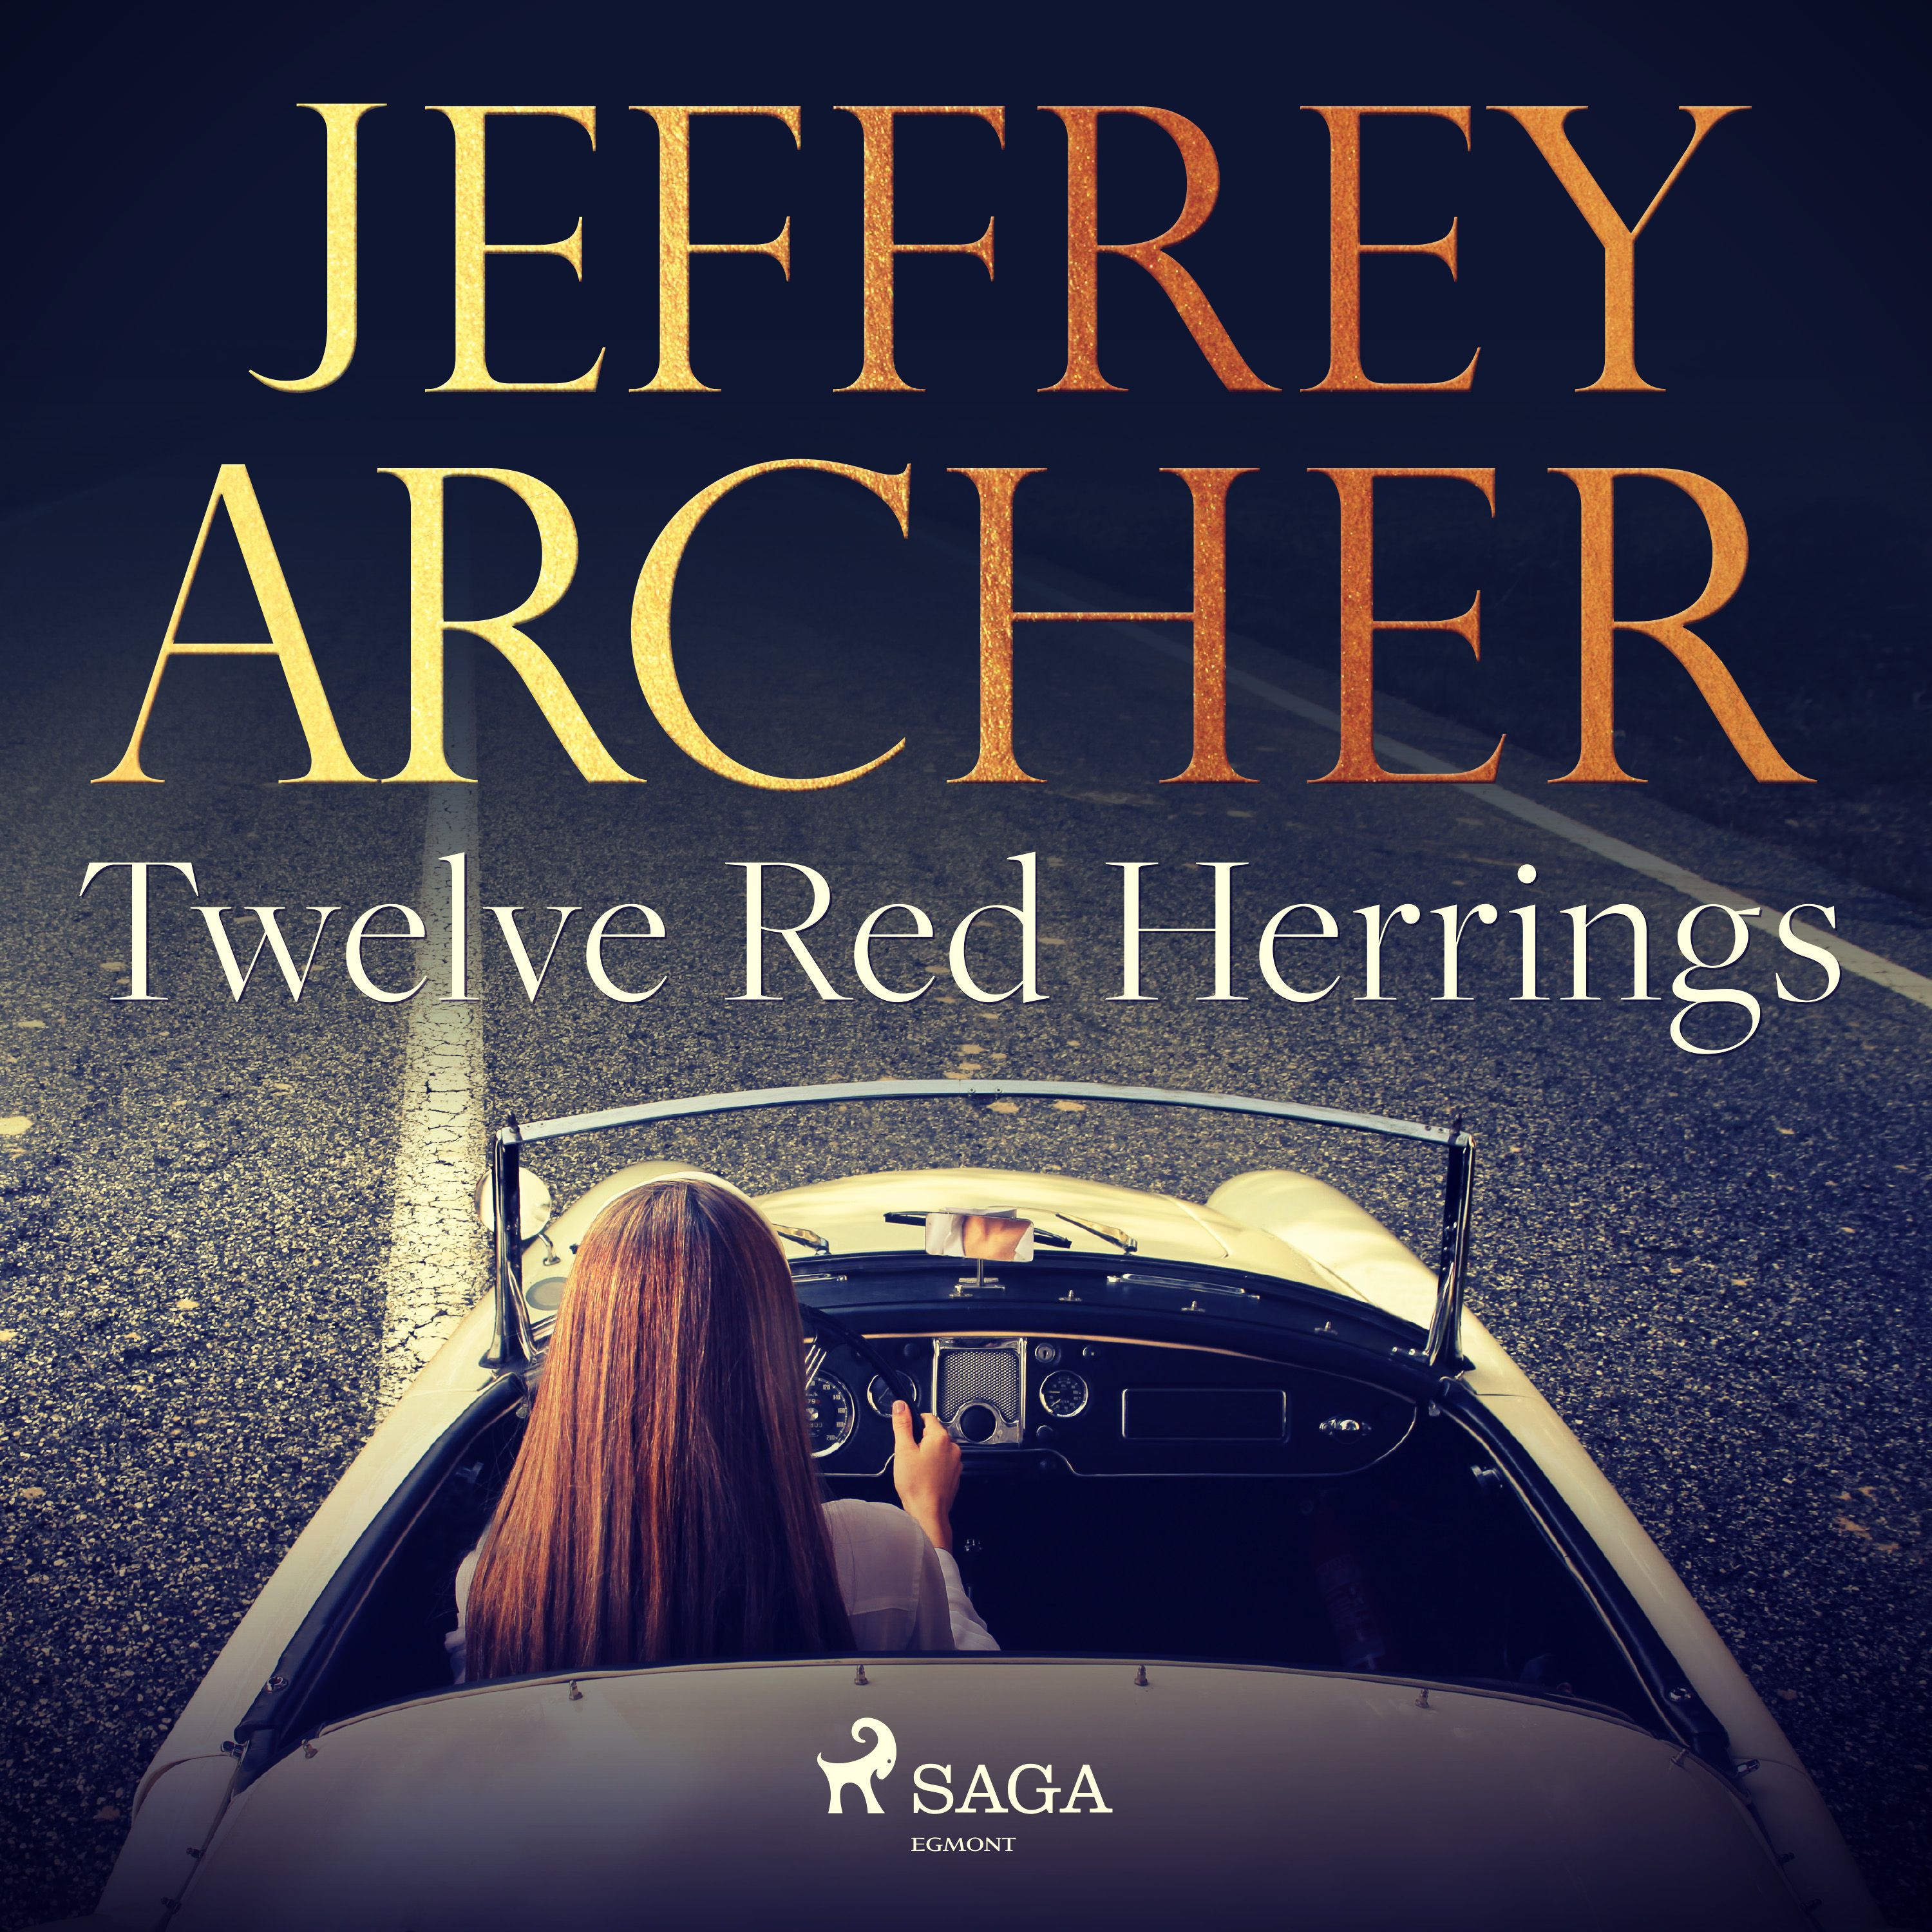 Twelve Red Herrings, lydbog af Jeffrey Archer